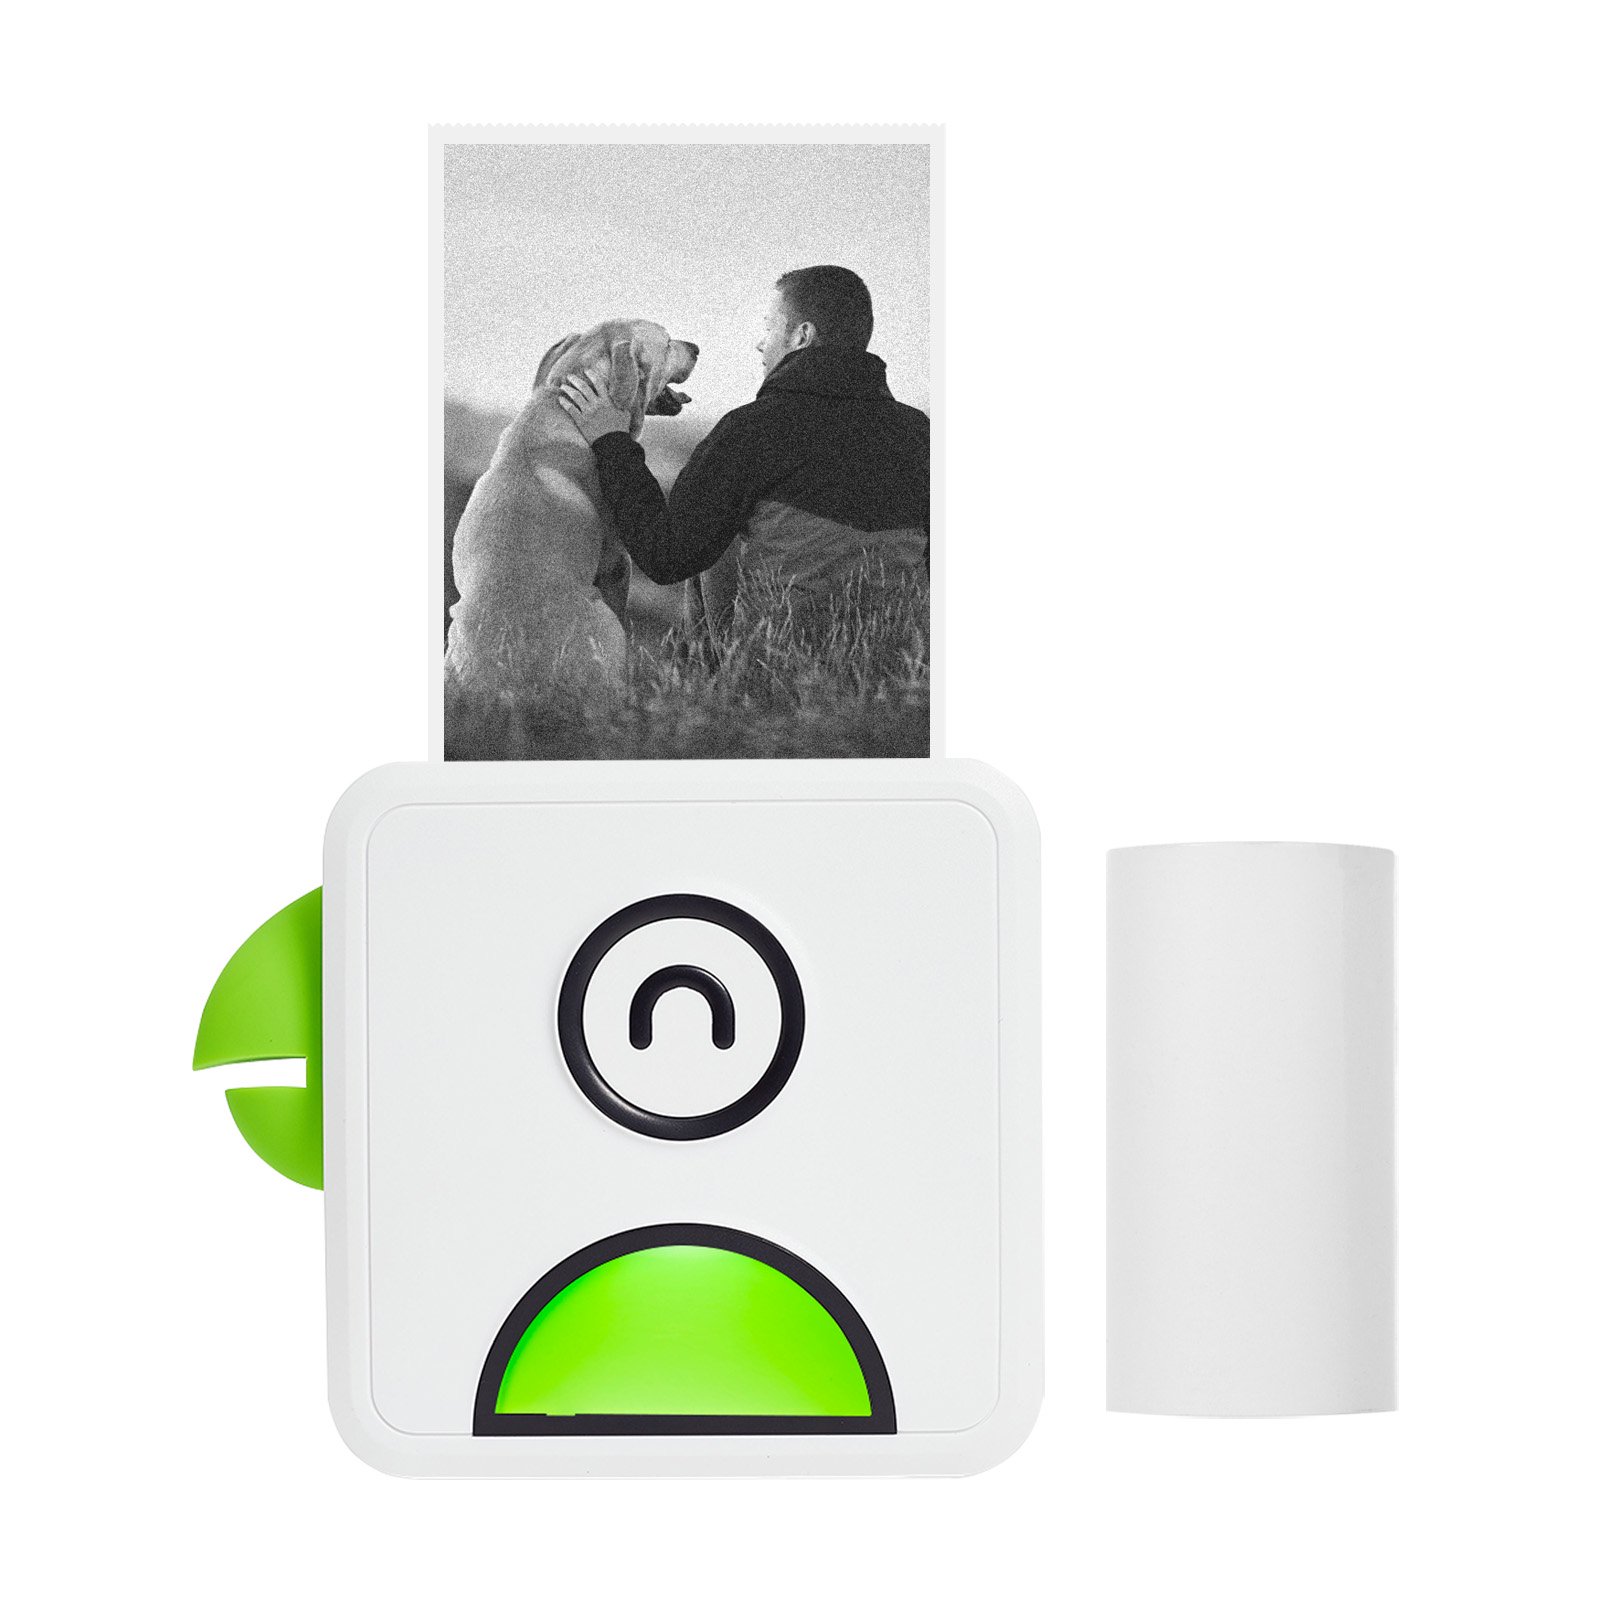 Thermal Photo Printer 200dpi Portable BT Wireless Receipt Label Sticker Maker,Green